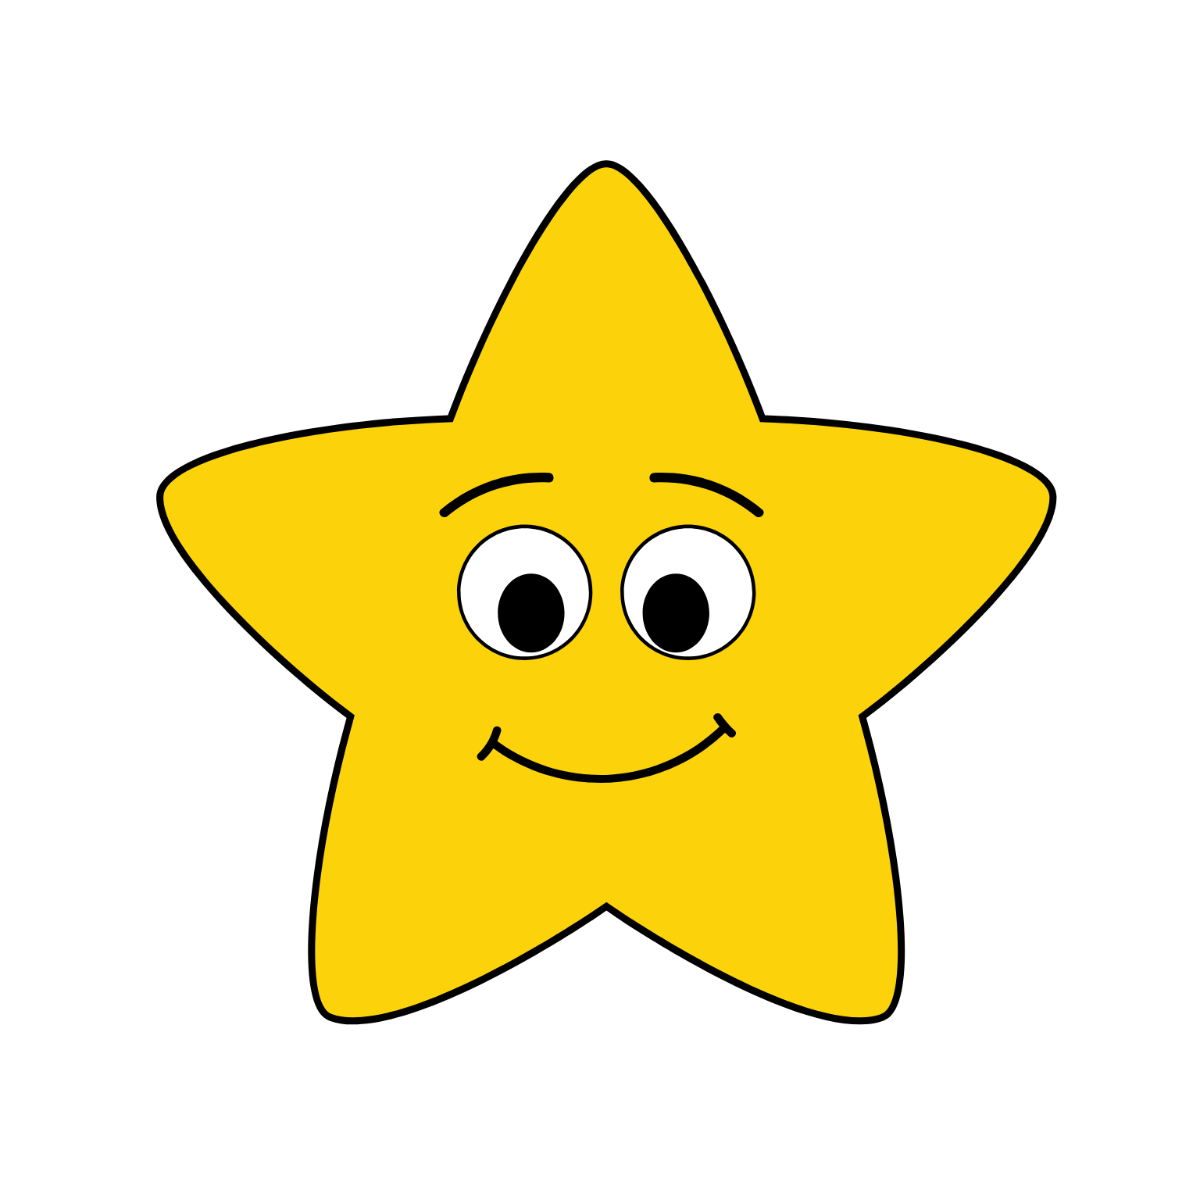 Free star